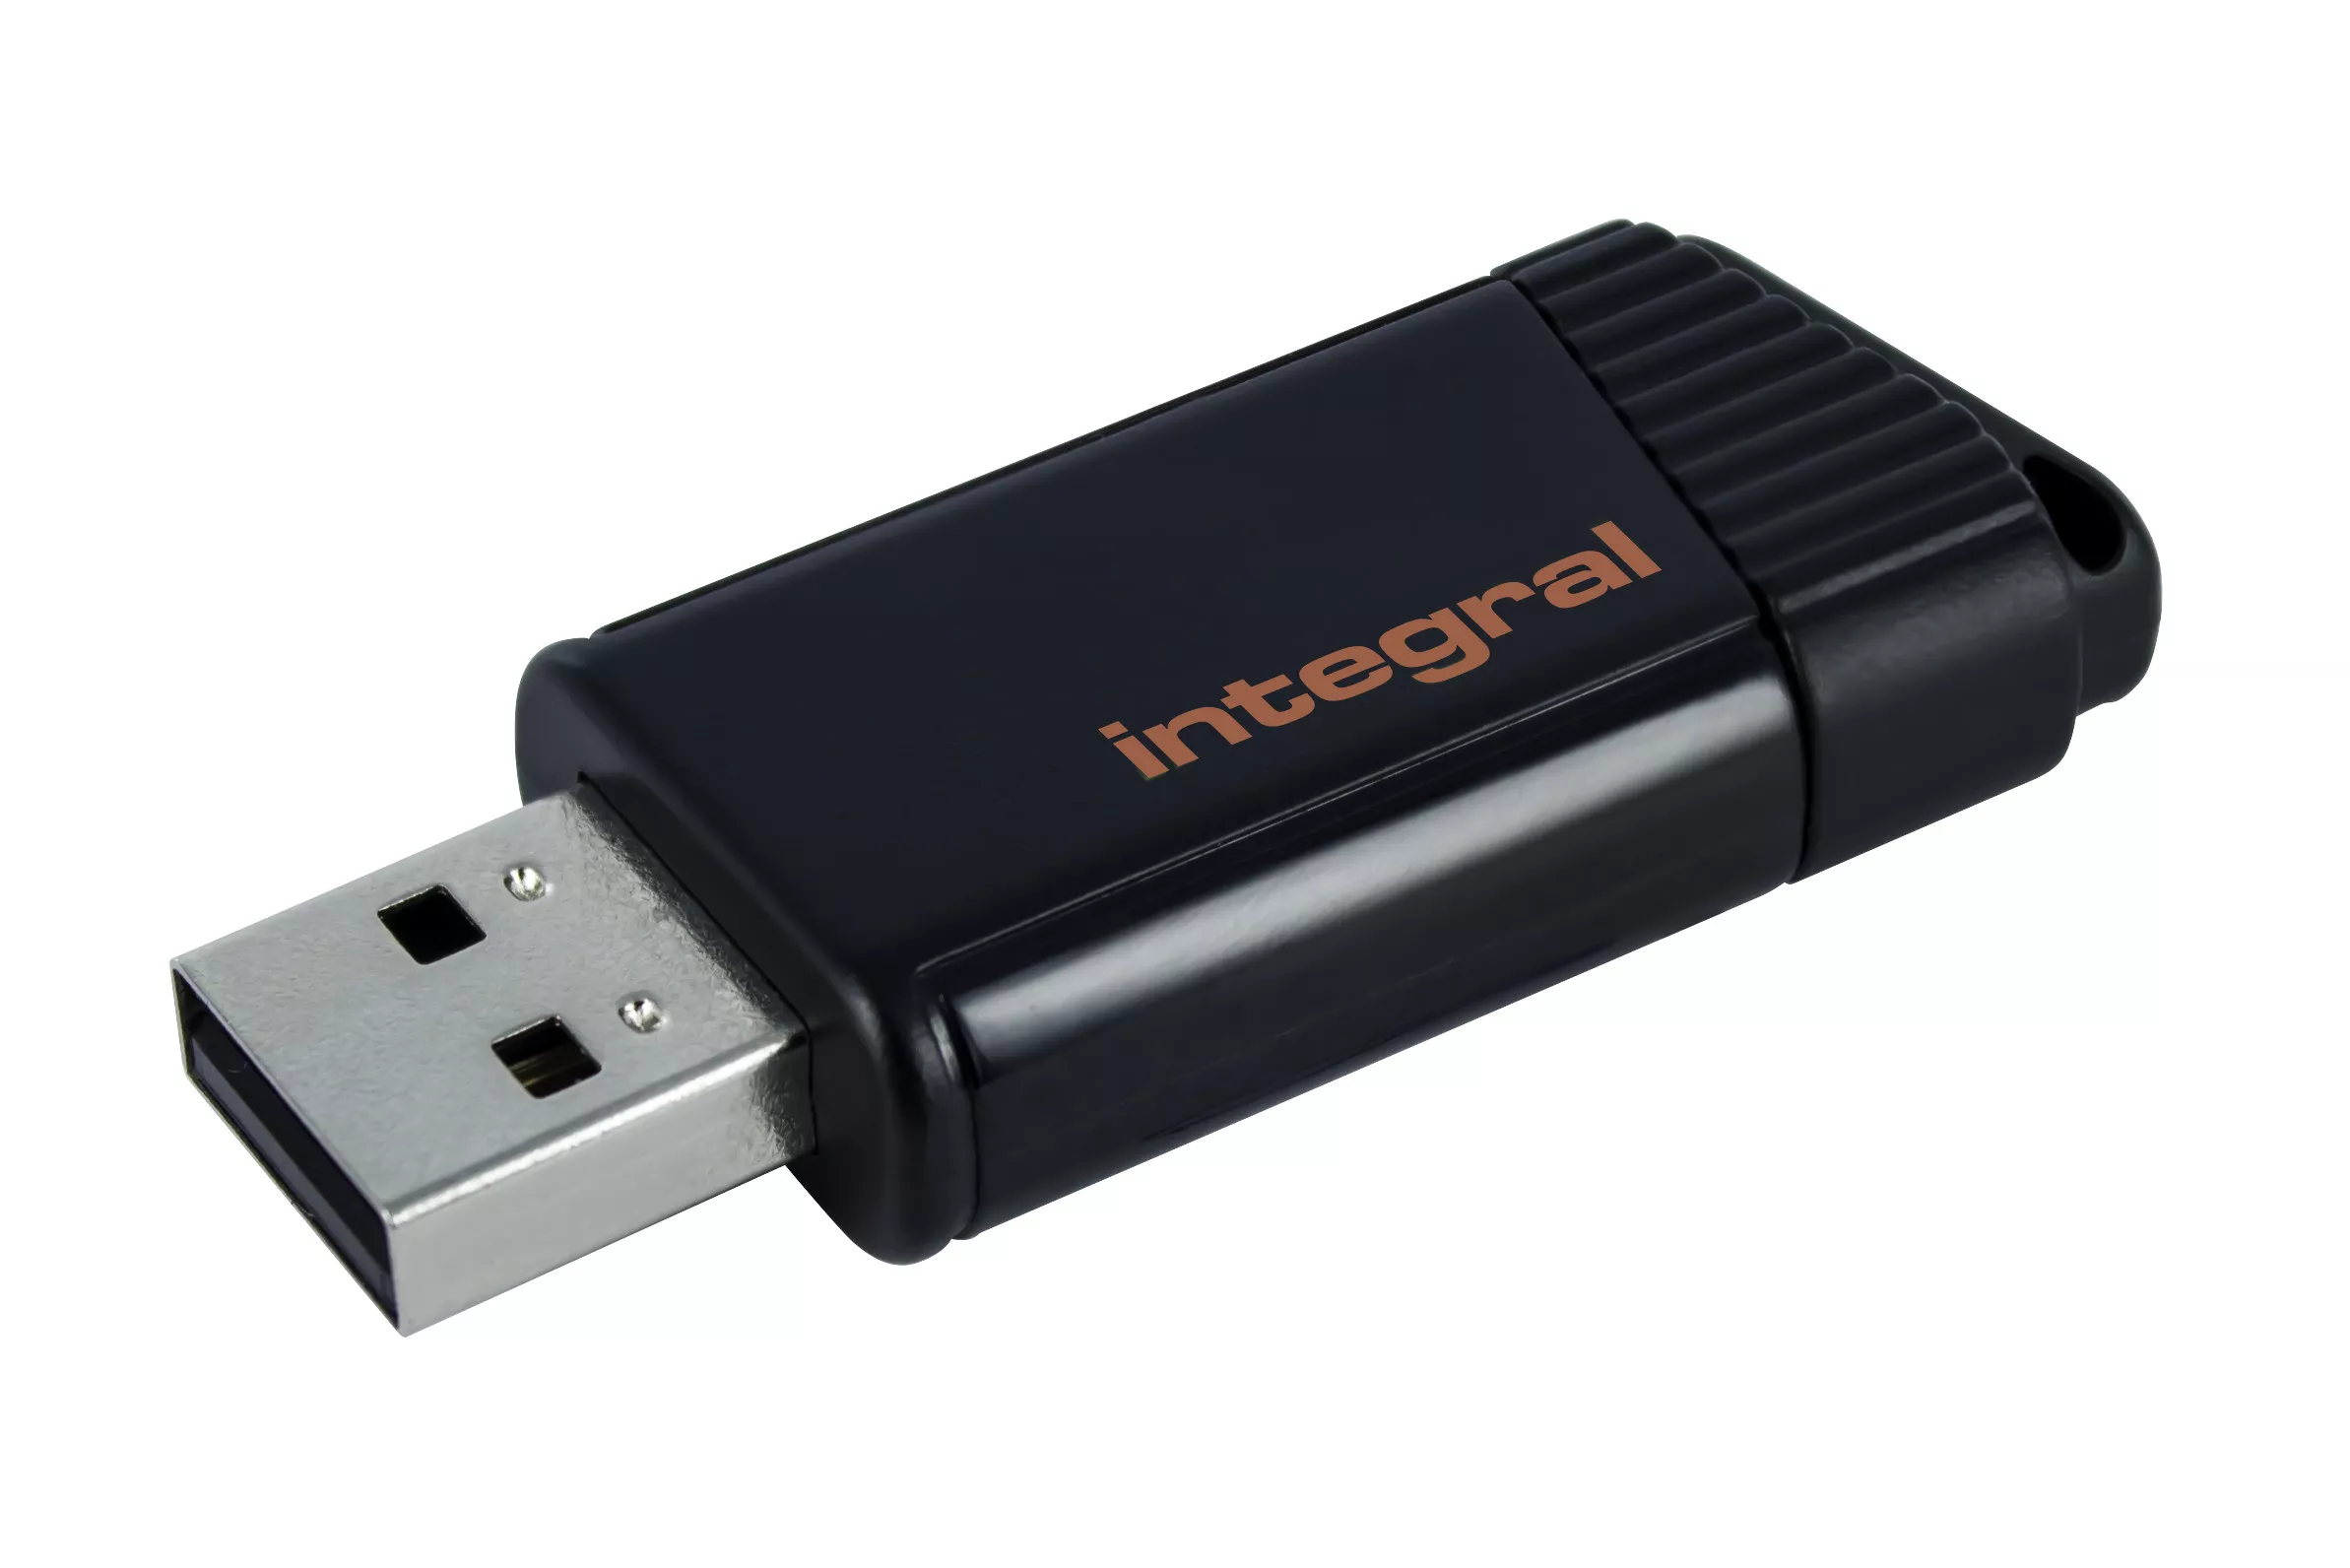 Achat Integral 32GB USB2.0 DRIVE PULSE ORANGE INTEGRAL et autres produits de la marque Integral